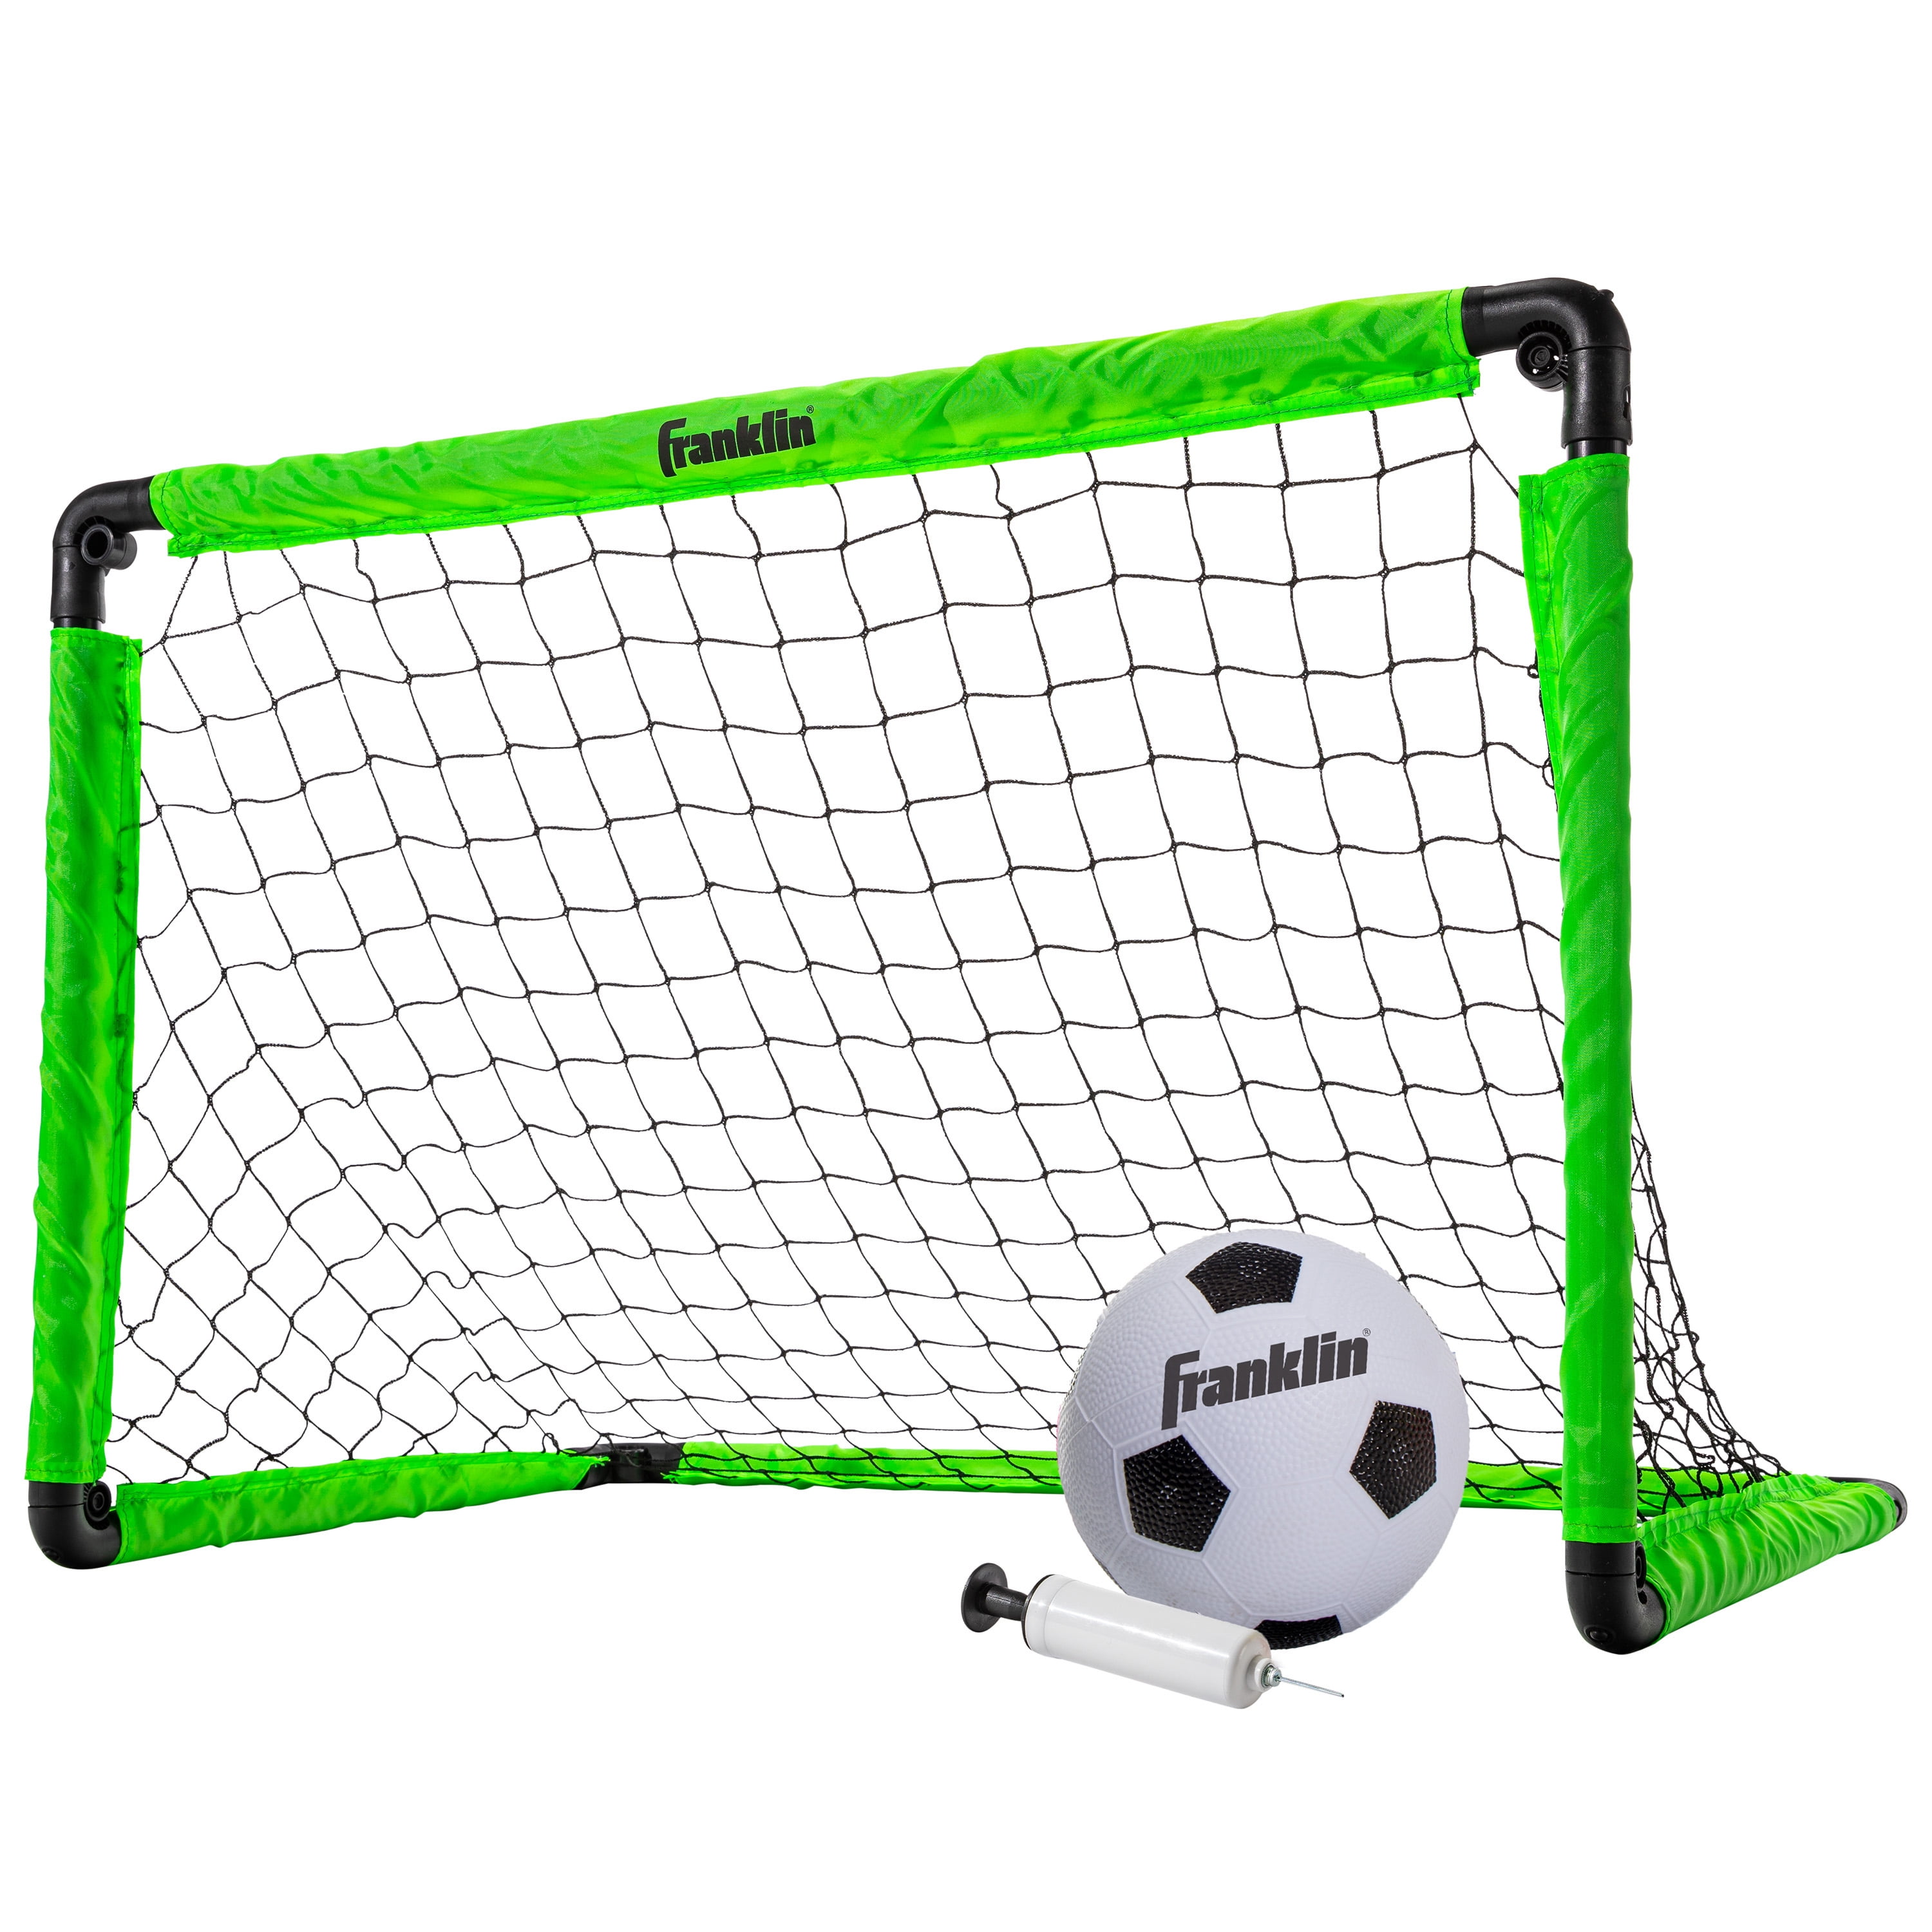 VOSAREA 9pcs Durable Stable Soccer Playing Kit Soccer Set Football Playset Soccer Goals Soccer Balls for Backyard Garden Lawn Park 